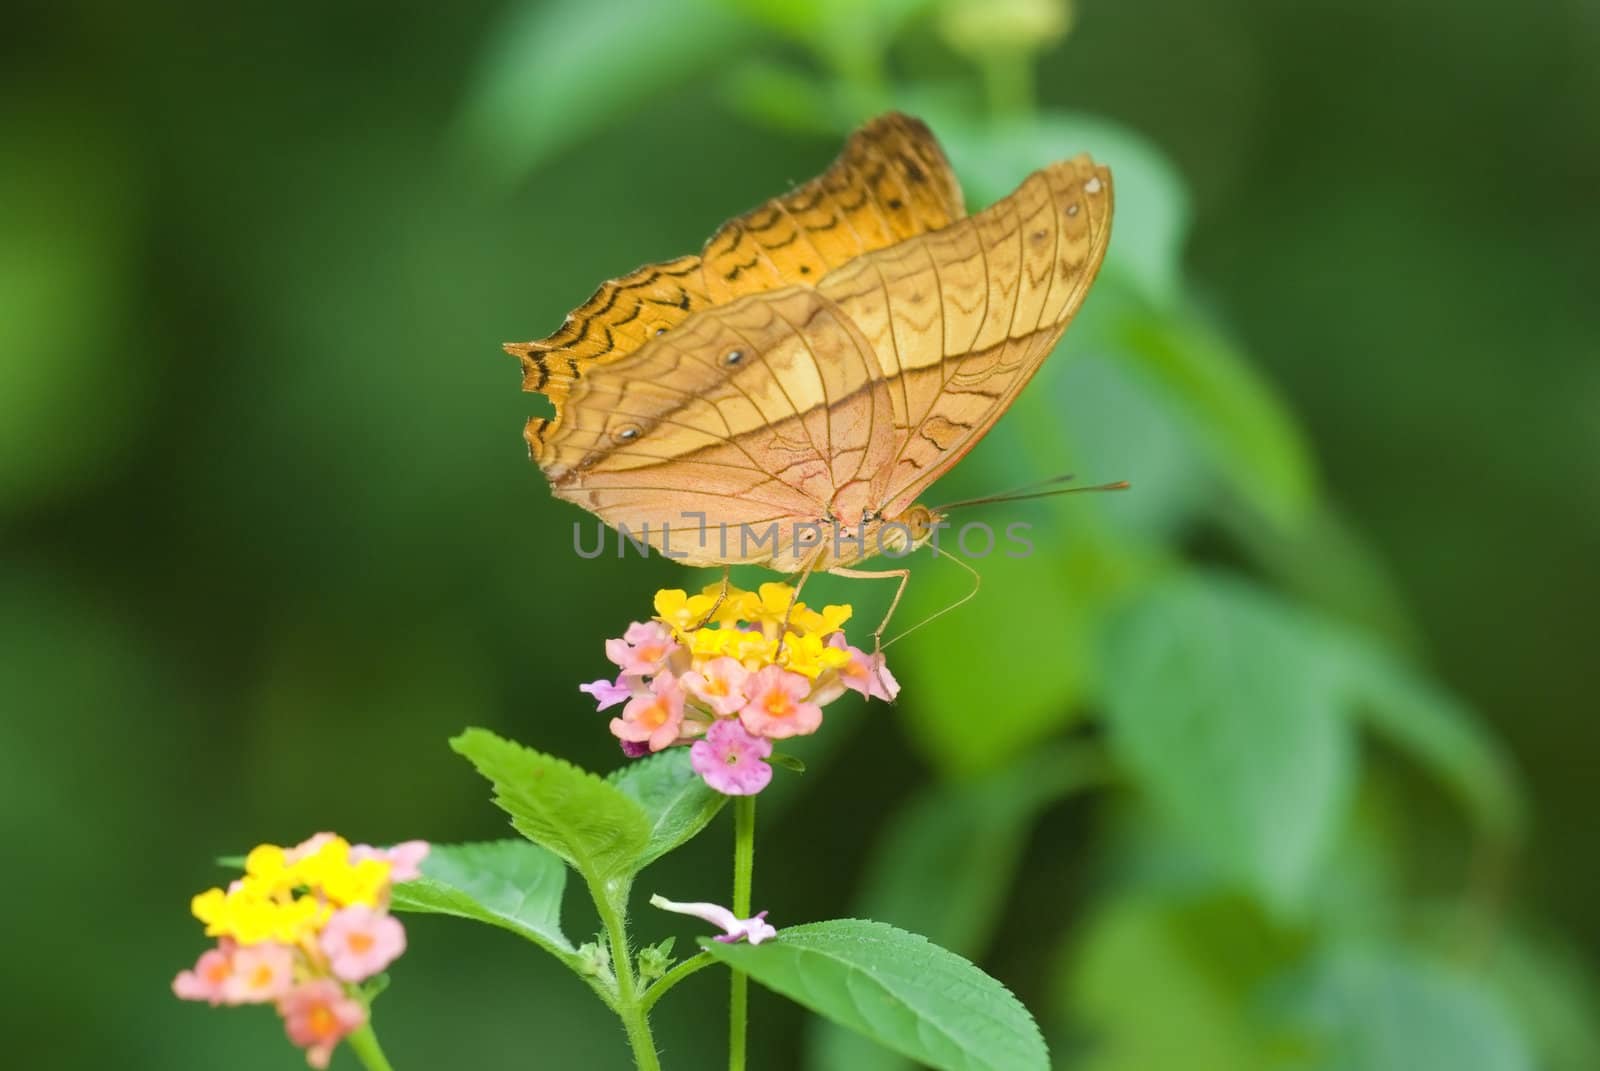 Butterfly on a Flower 